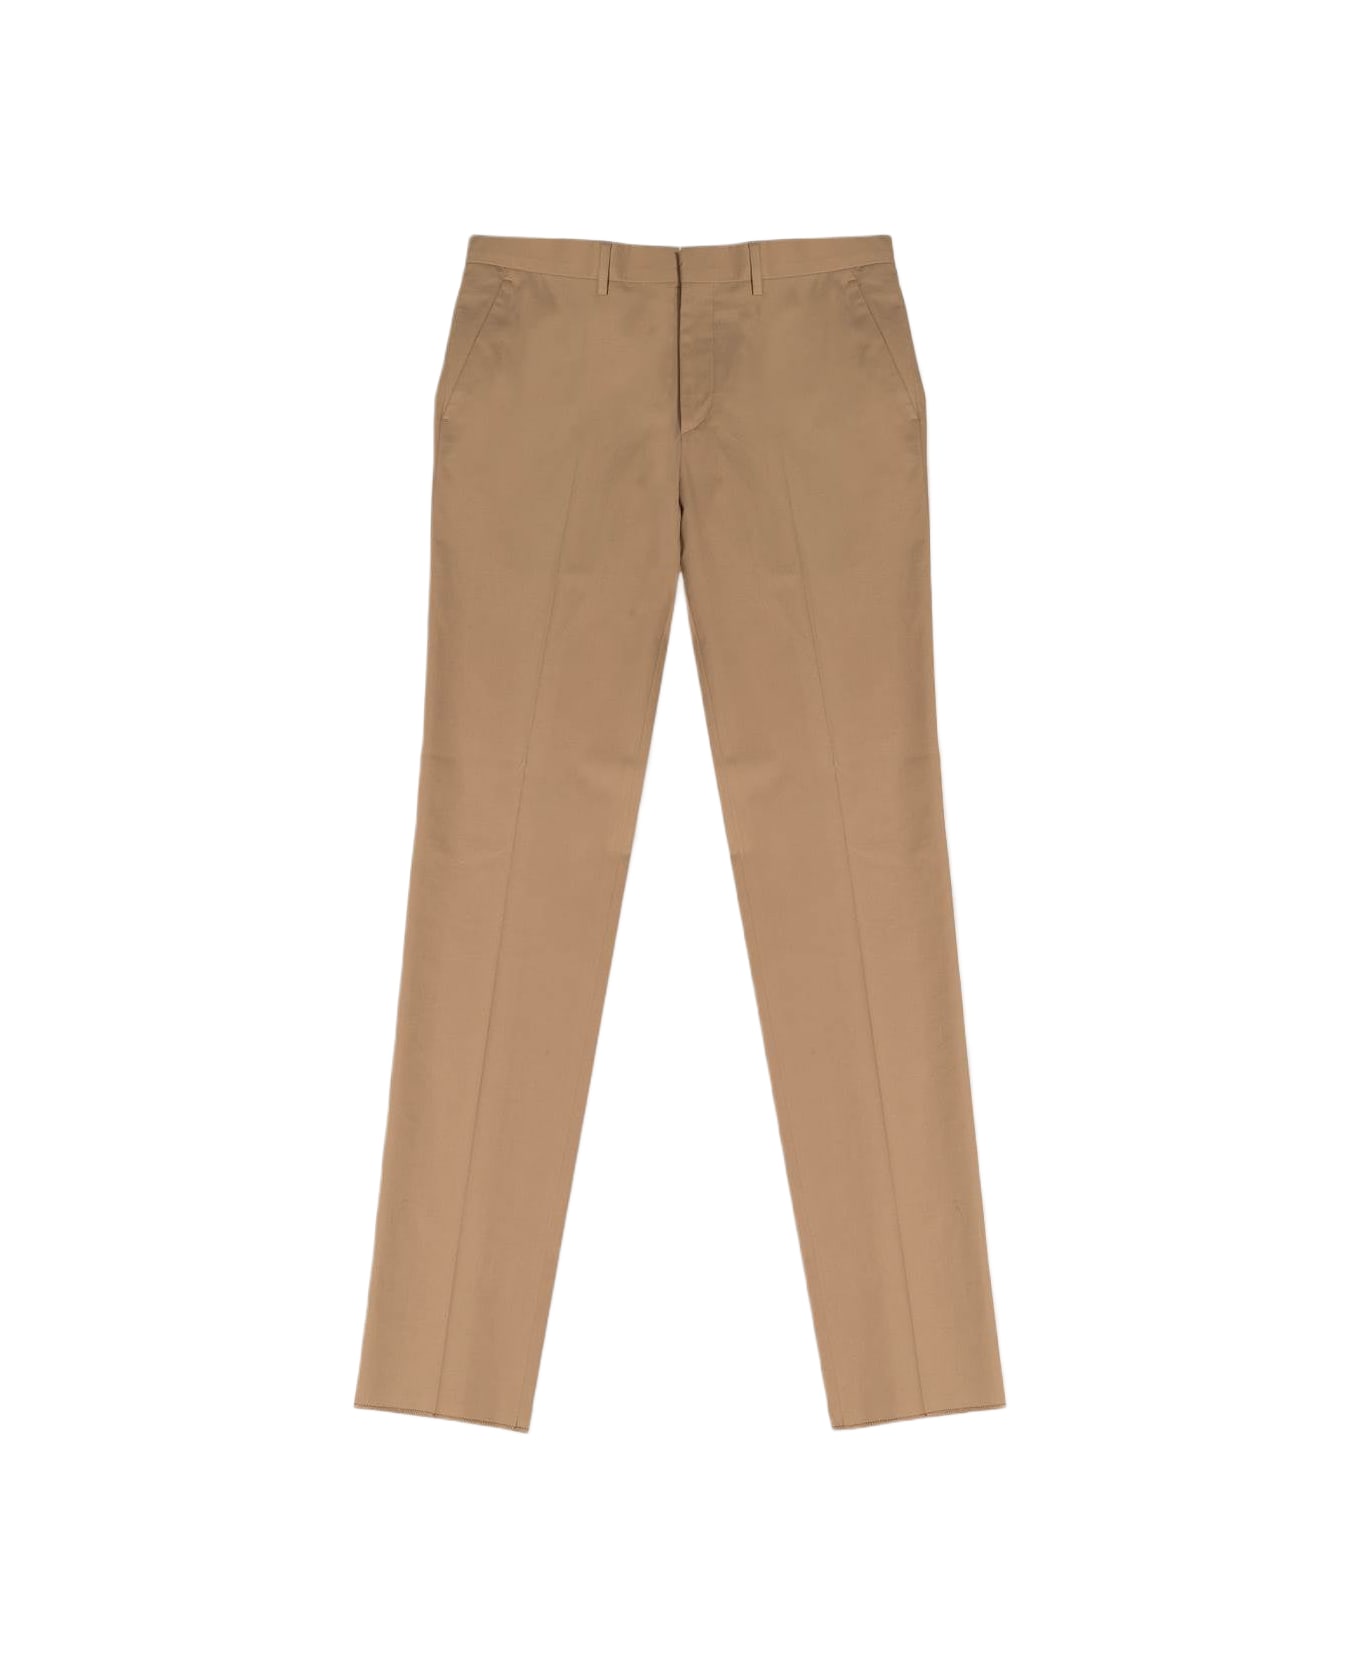 Larusmiani Chino Trousers Pants - Beige